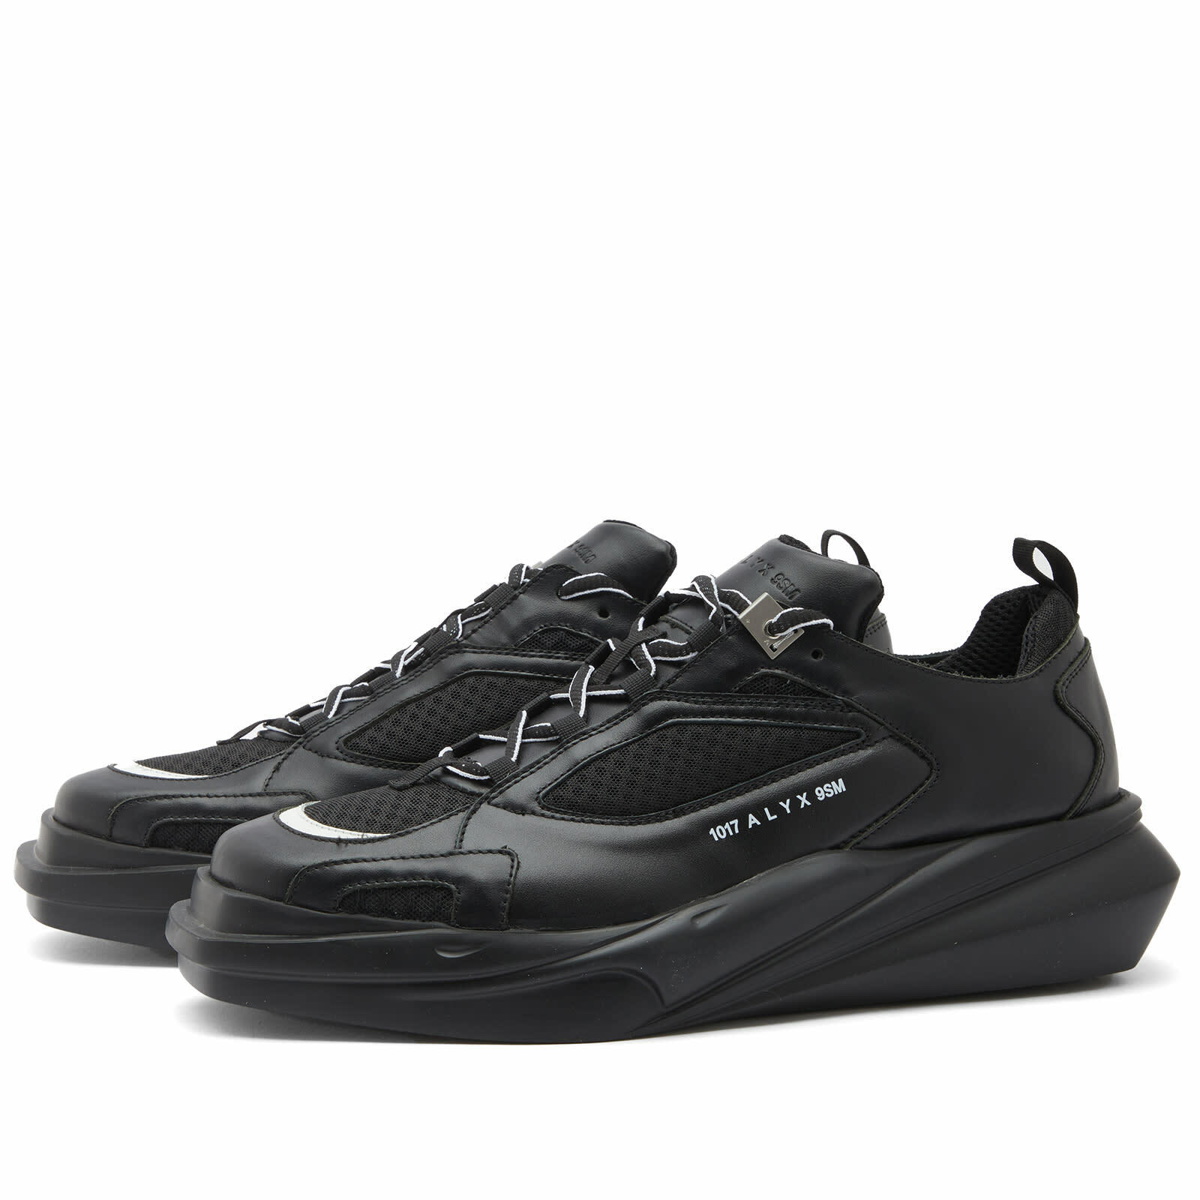 1017 ALYX 9SM Men's Mono Hiking Sneakers in Black/White 1017 ALYX 9SM